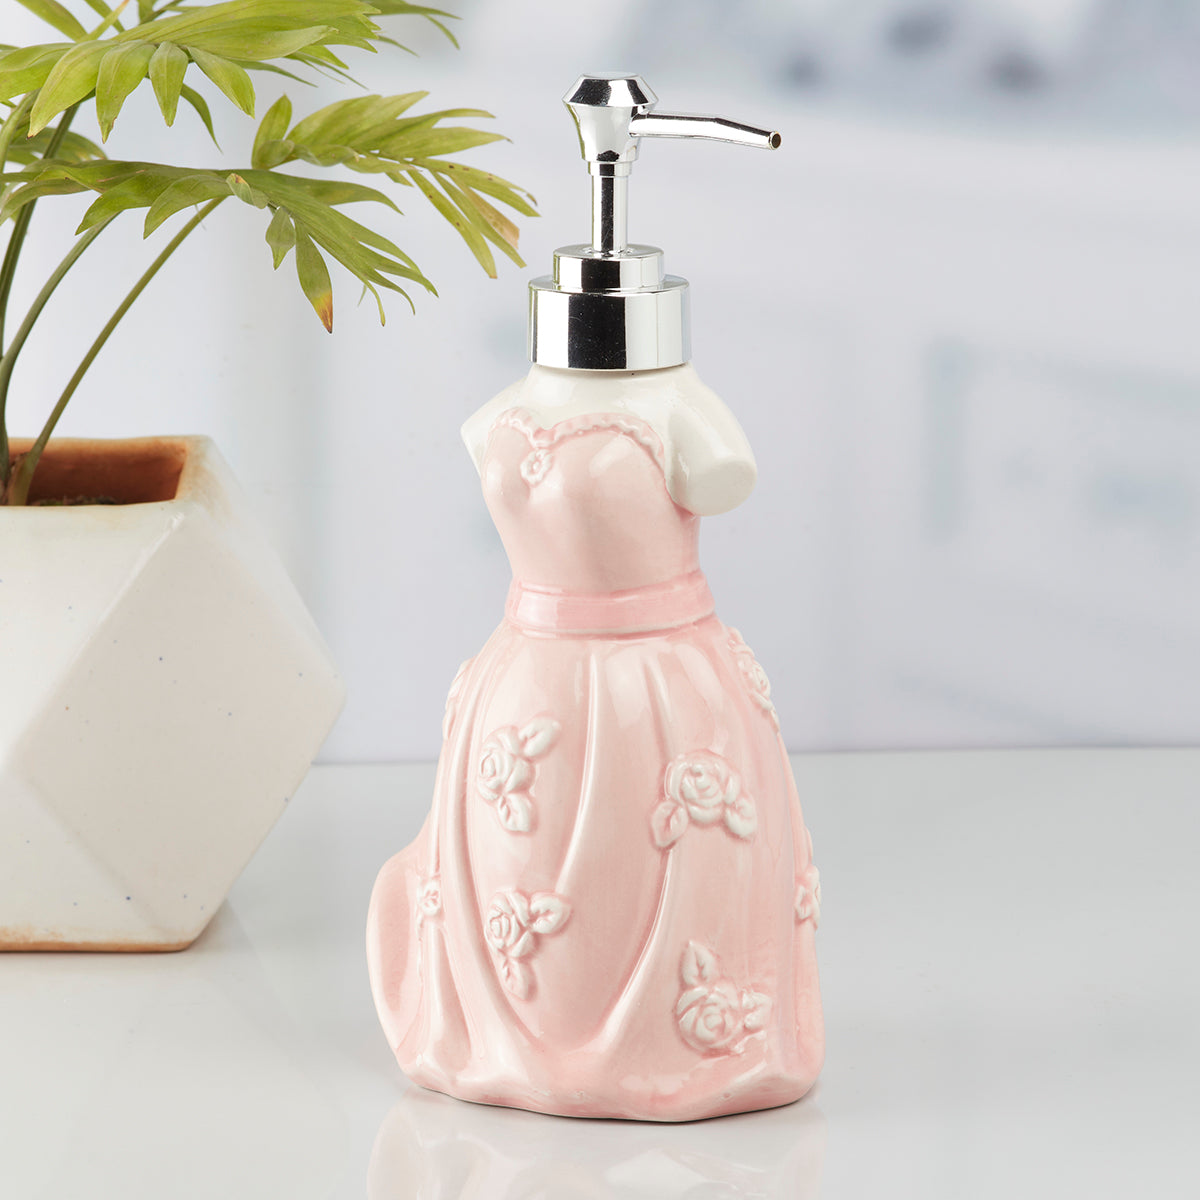 Ceramic Soap Dispenser handwash Pump for Bathroom, Set of 1, Pink (10160)